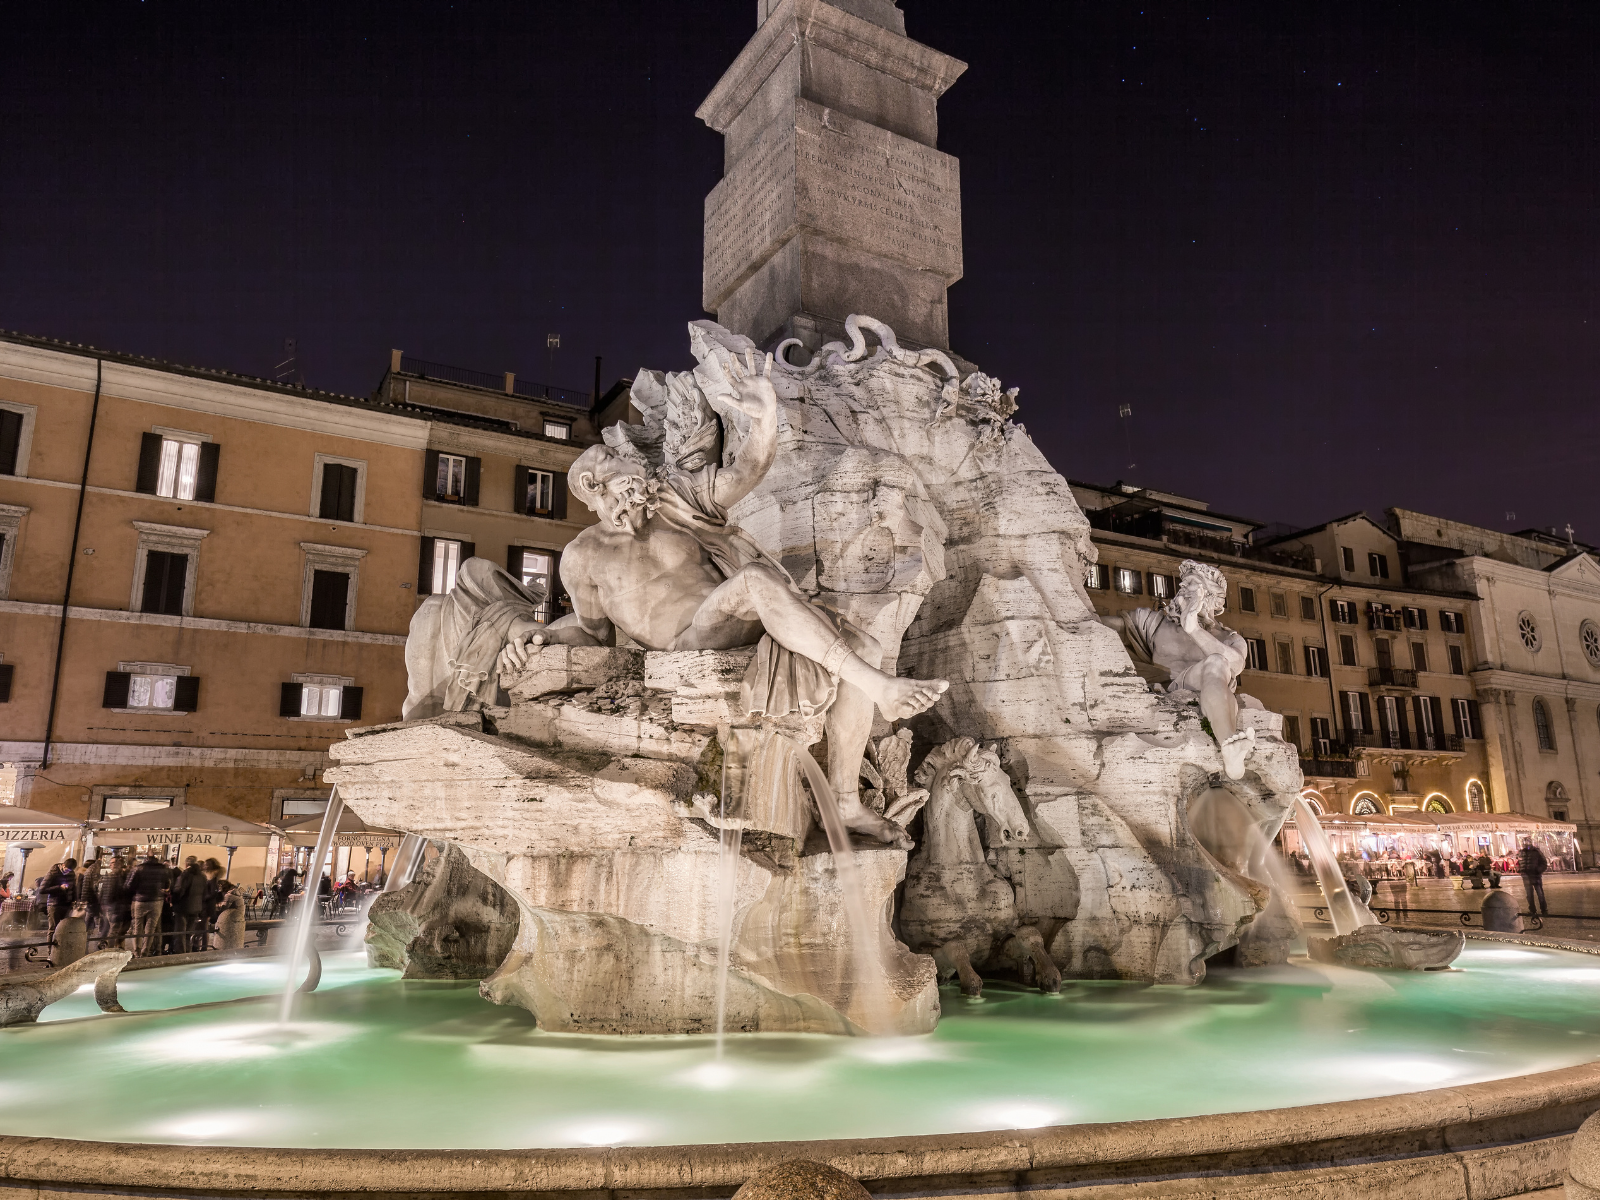 Fontana dei Quattro Fiumi, one of Rome's most beautiful fountains